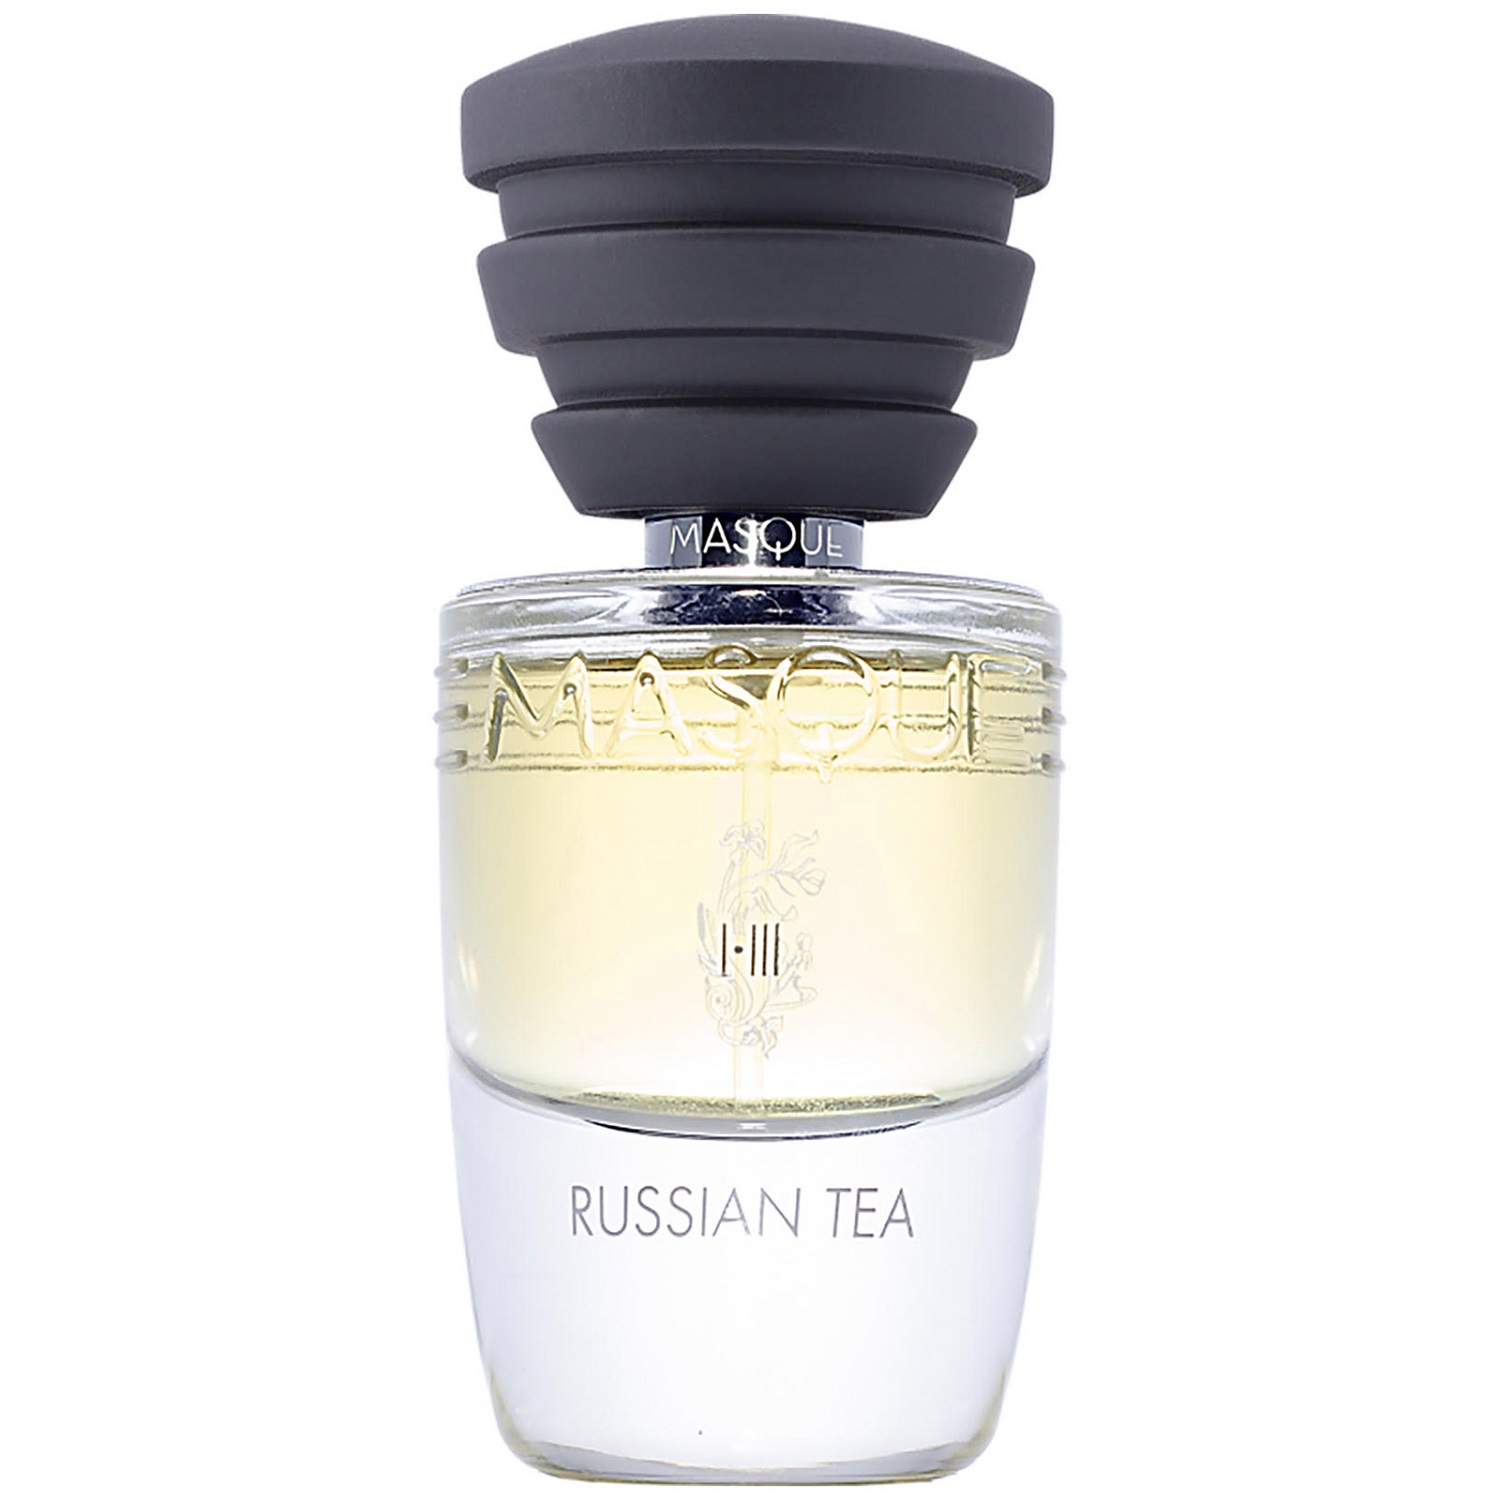 Masque Milano - Russian Tea (1мл)